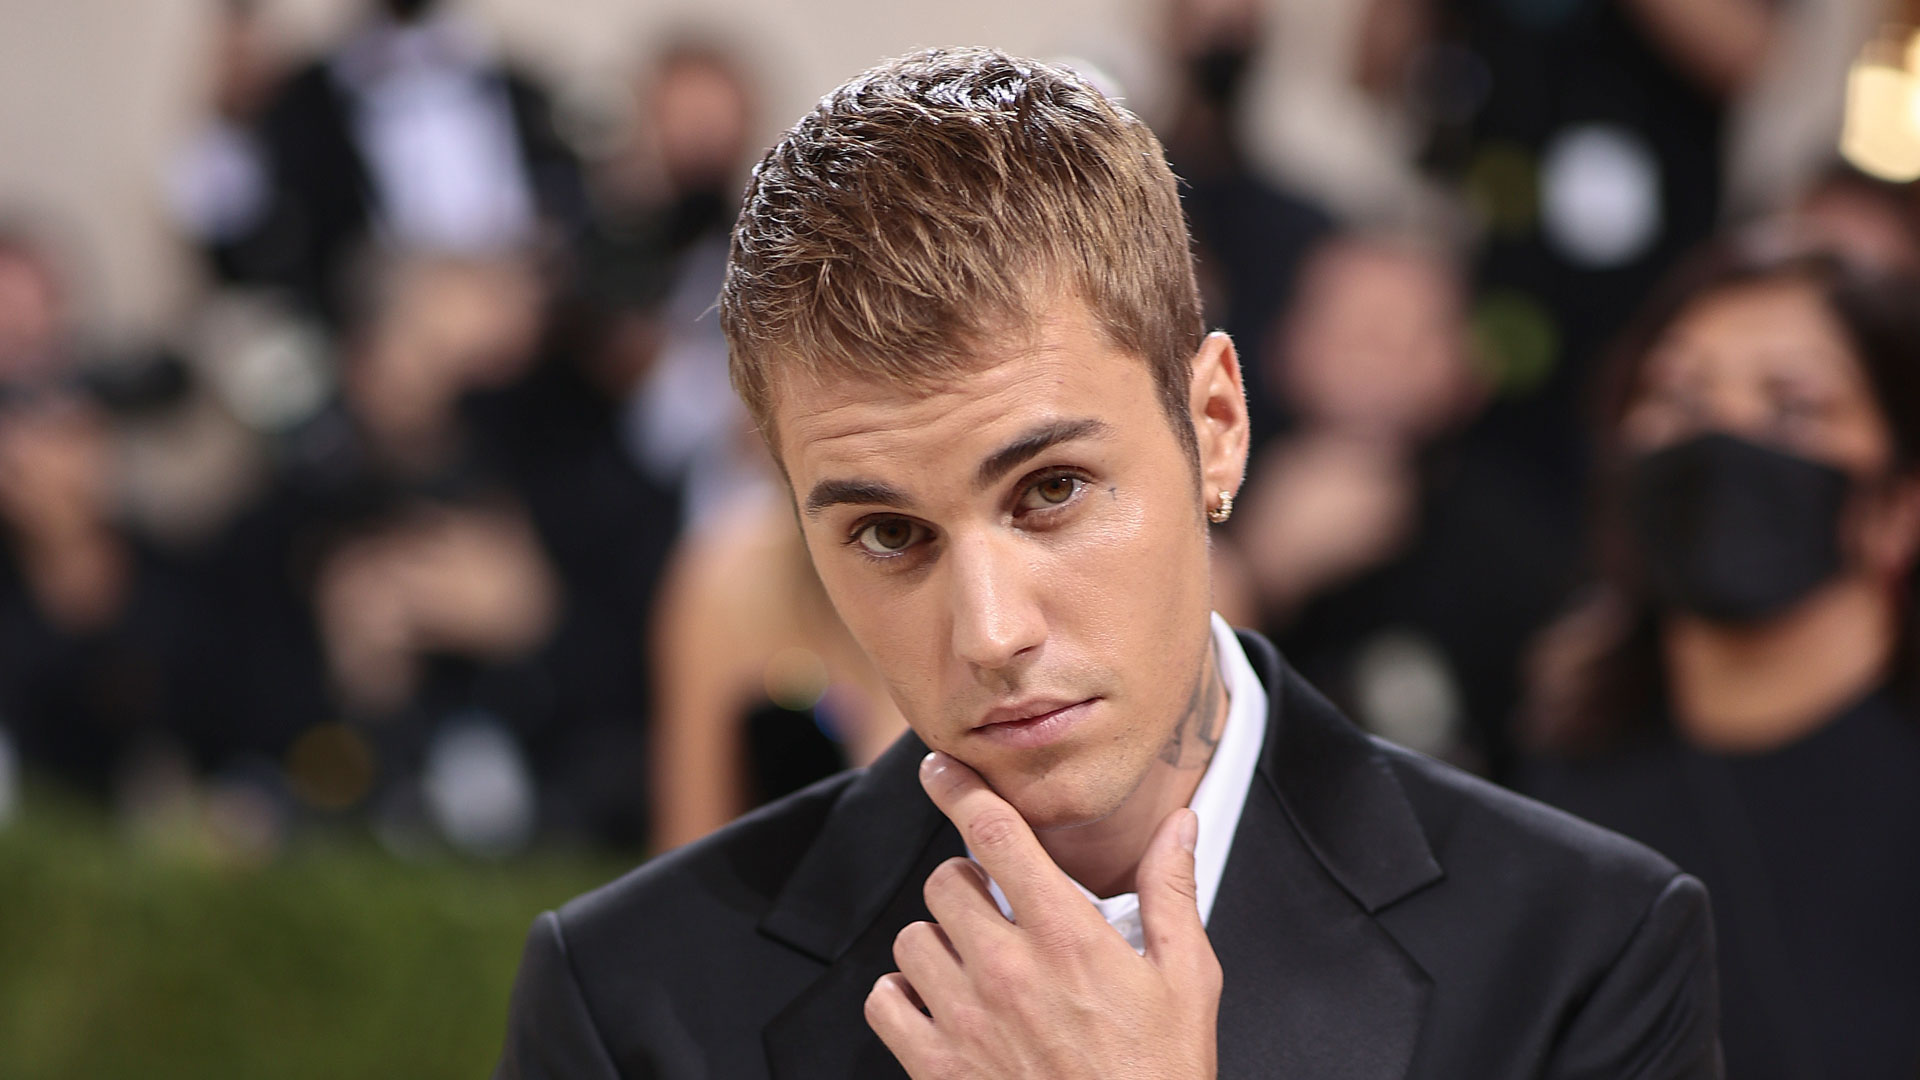 Justin Bieber: Tousled Caesar Cut With Choppy Fringe | Man For Himself